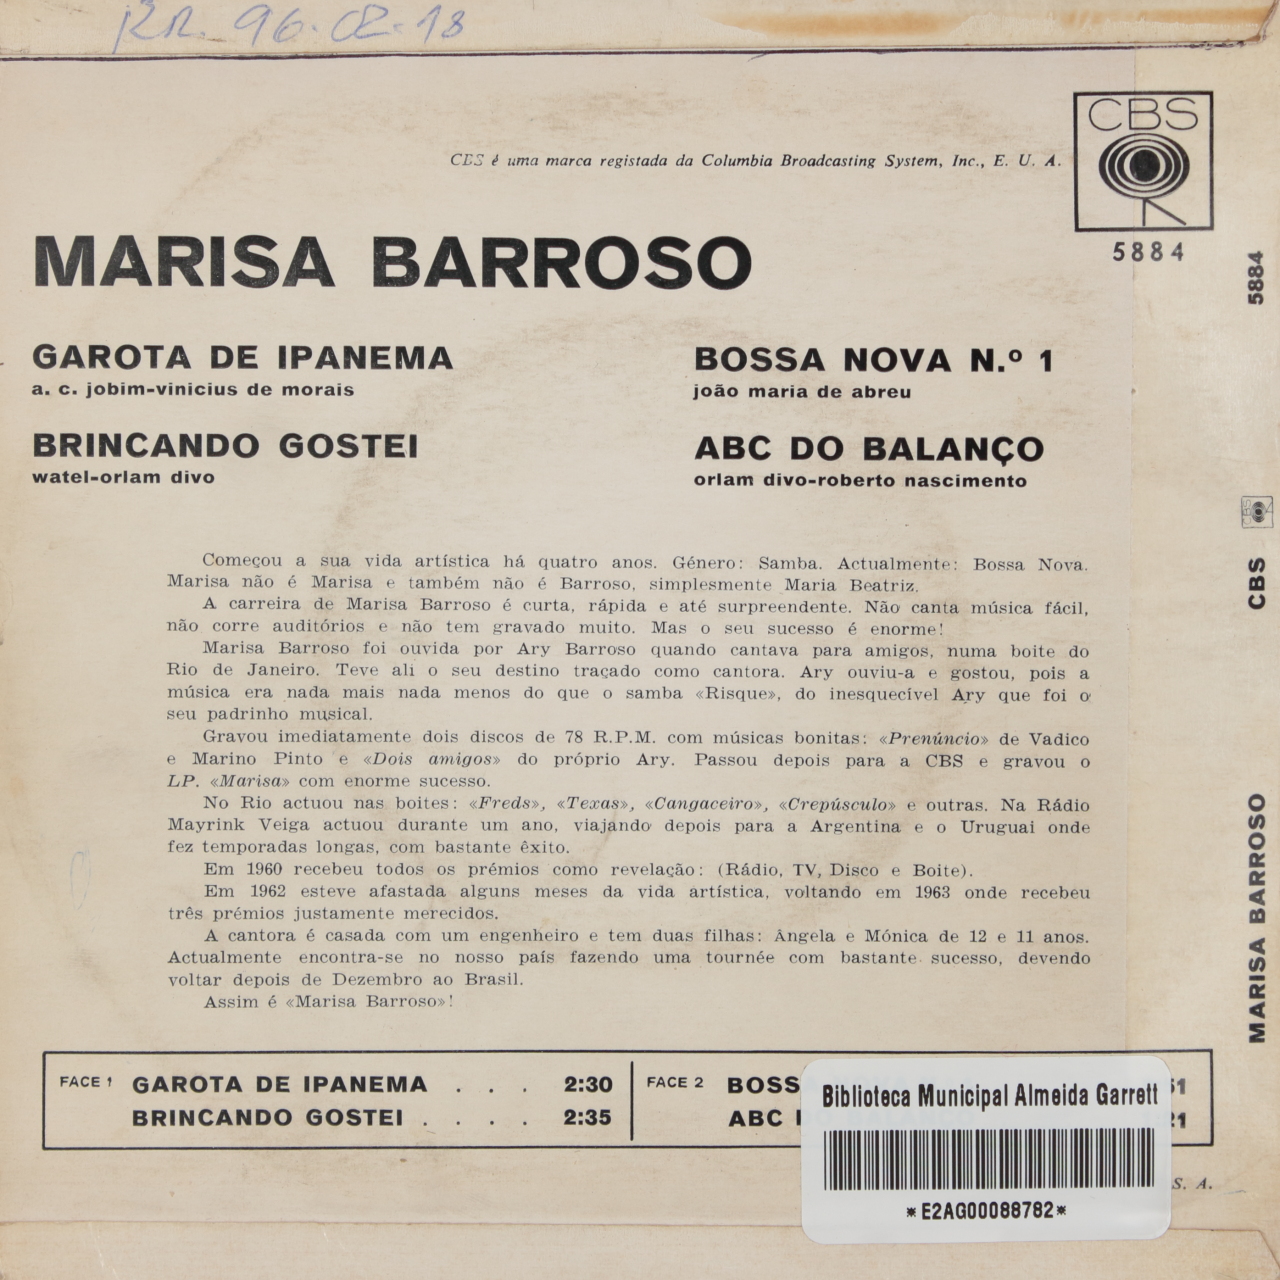 Marisa Barroso